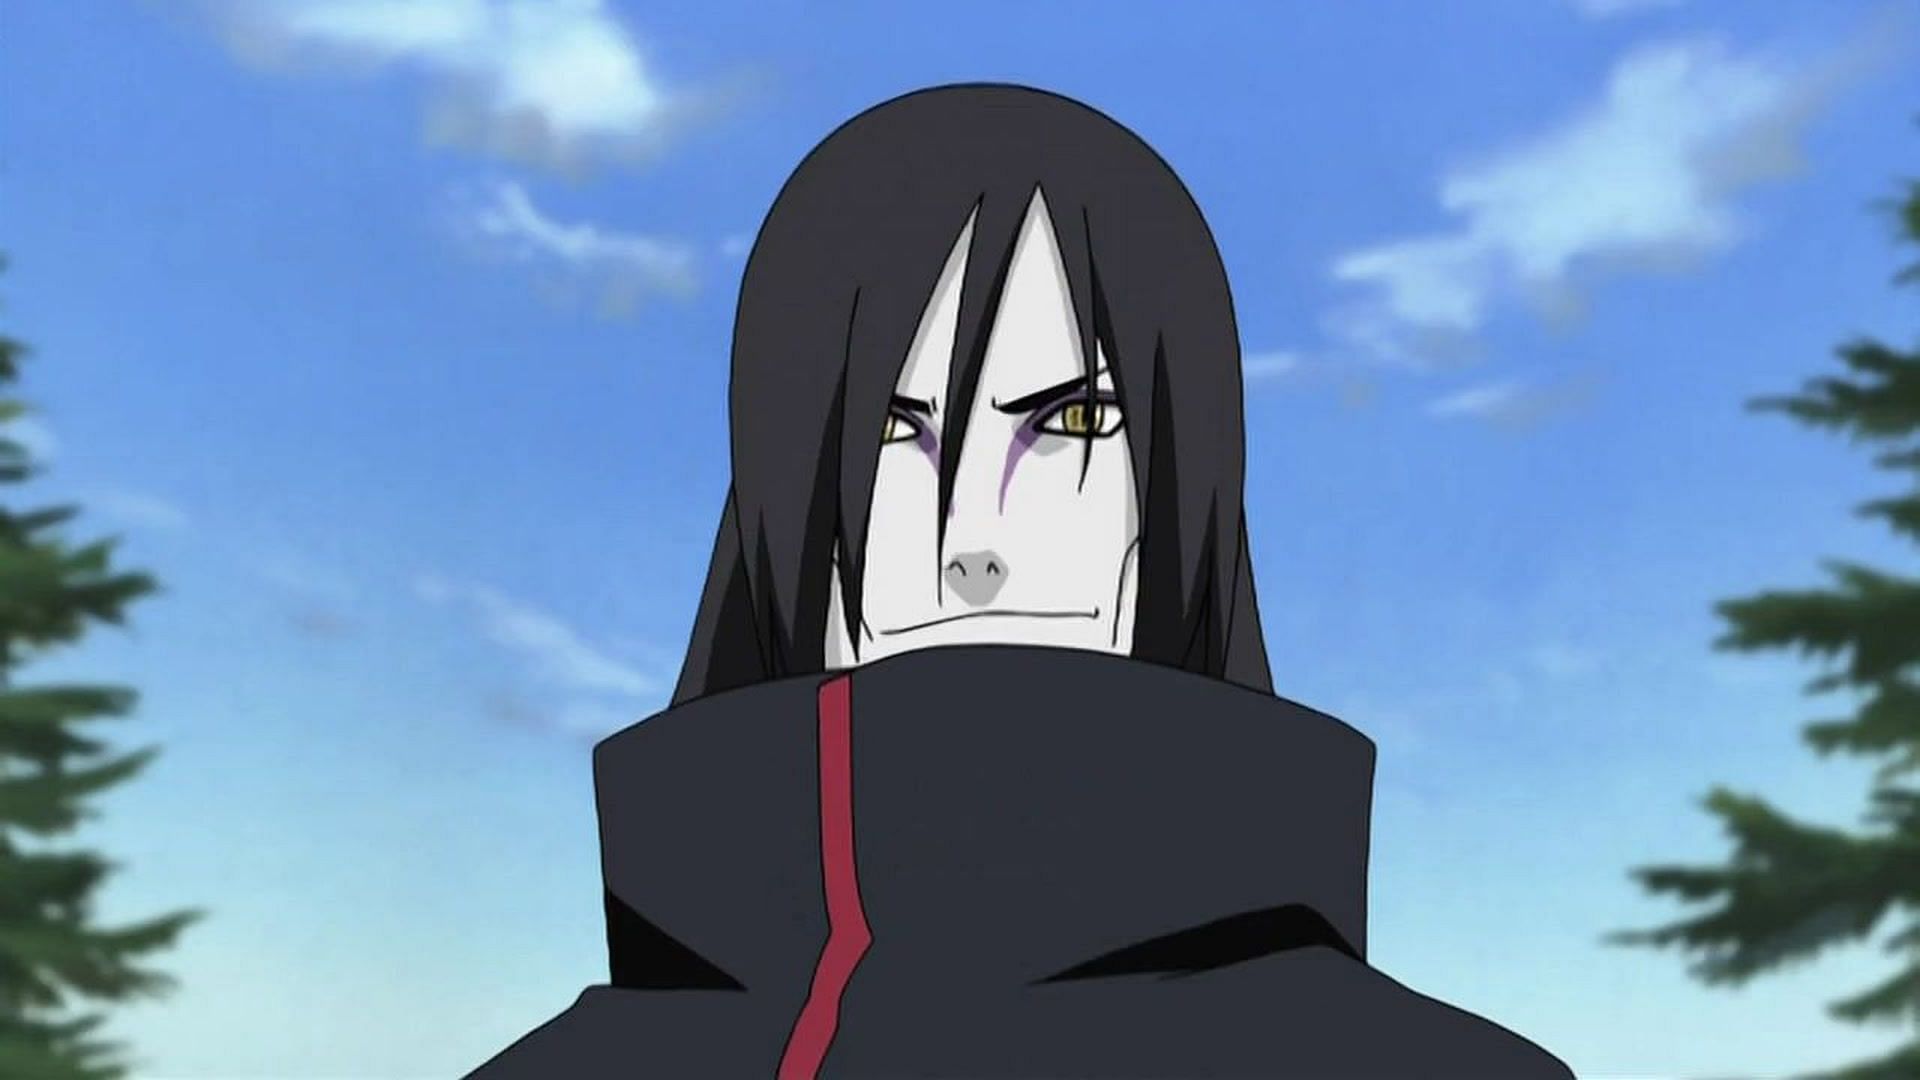 Orochimaru as seen in Naruto (Image via Studio Pierrot)